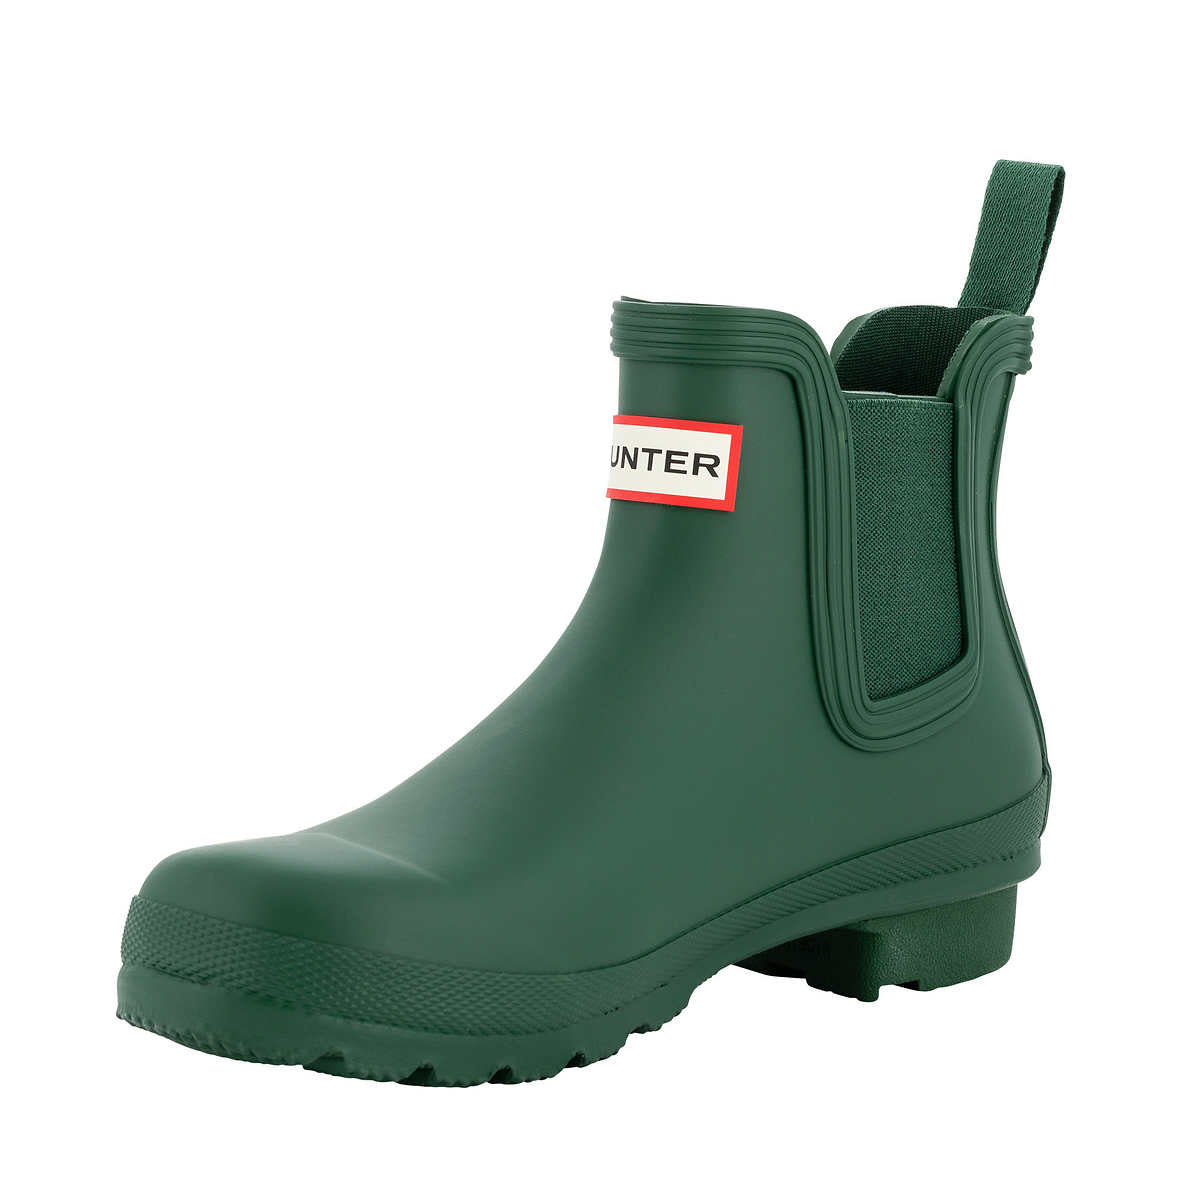 Hunter-bottes-mi-hautes-caoutchouc-femme-original-chelsea-boots-green-vert-3